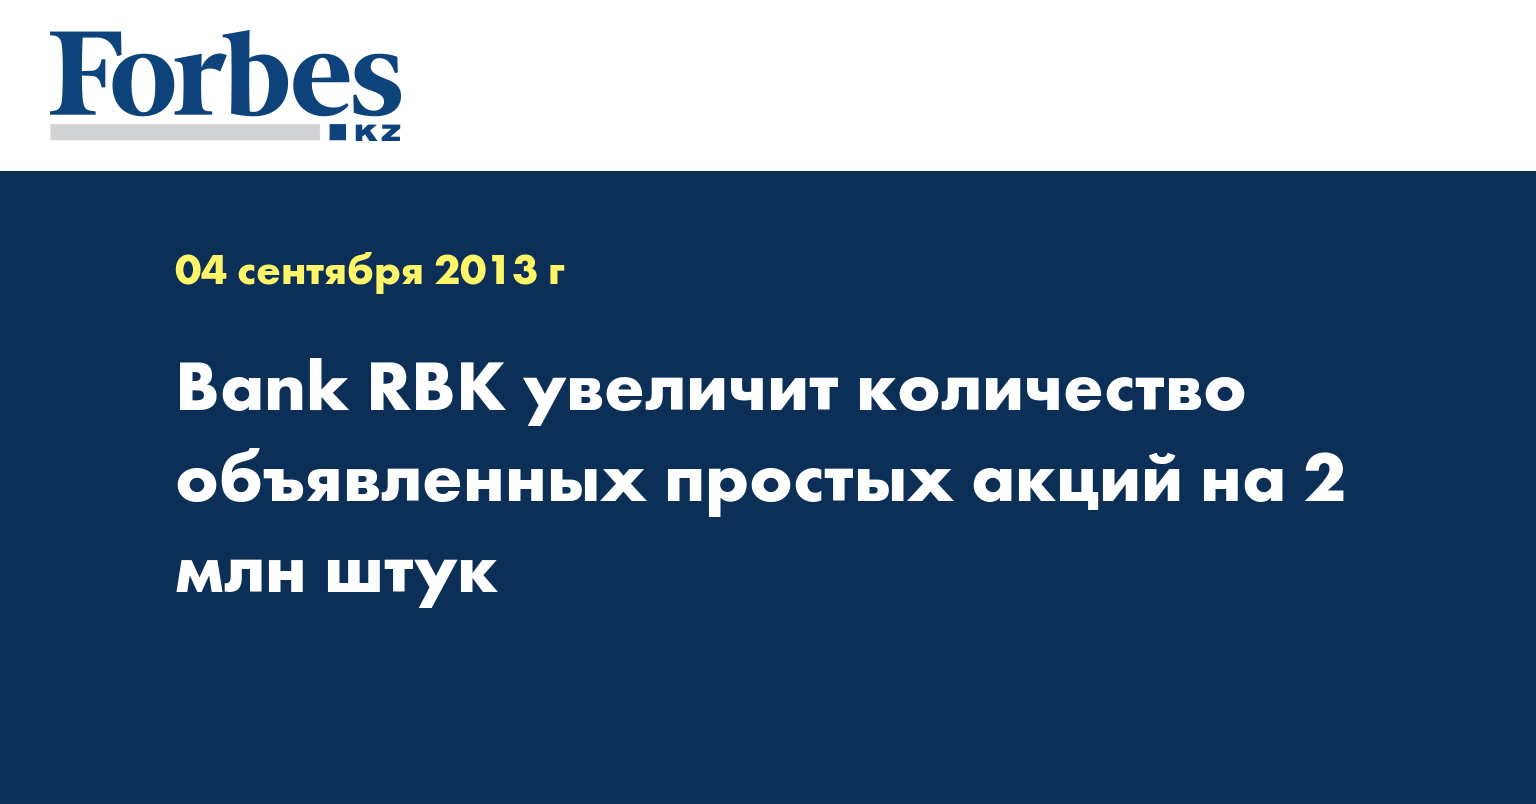 Bank RBK увеличит количество объявленных простых акций на 2 млн штук